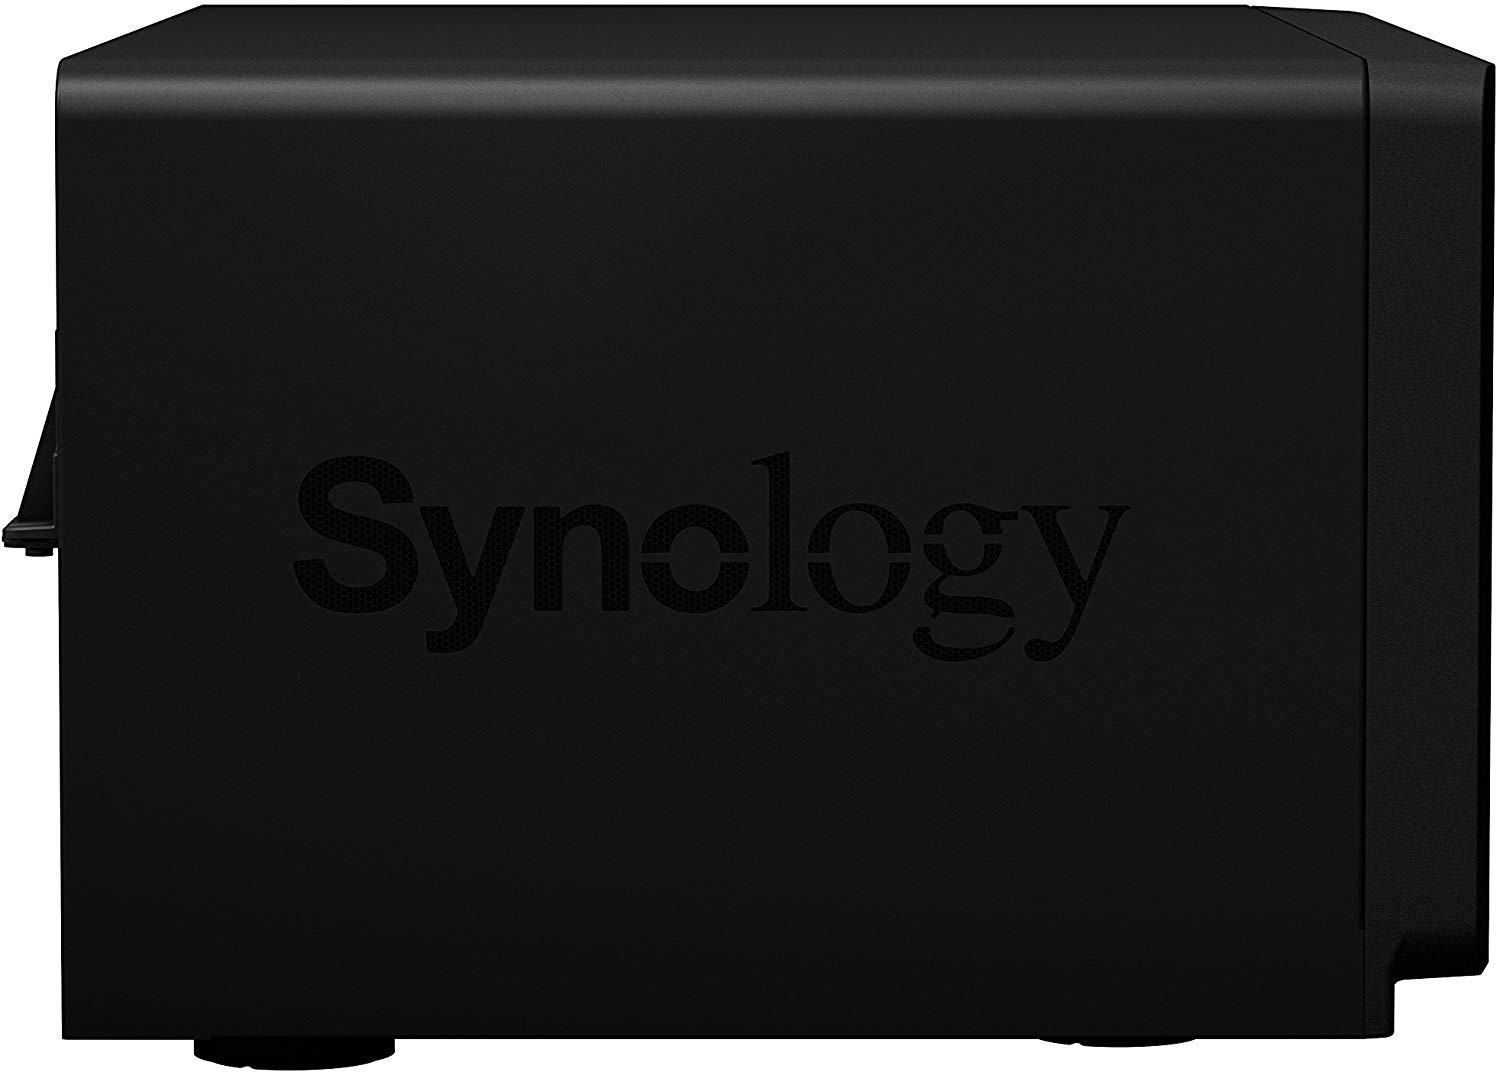 Synology 8 bay NAS DiskStation DS1817+_004